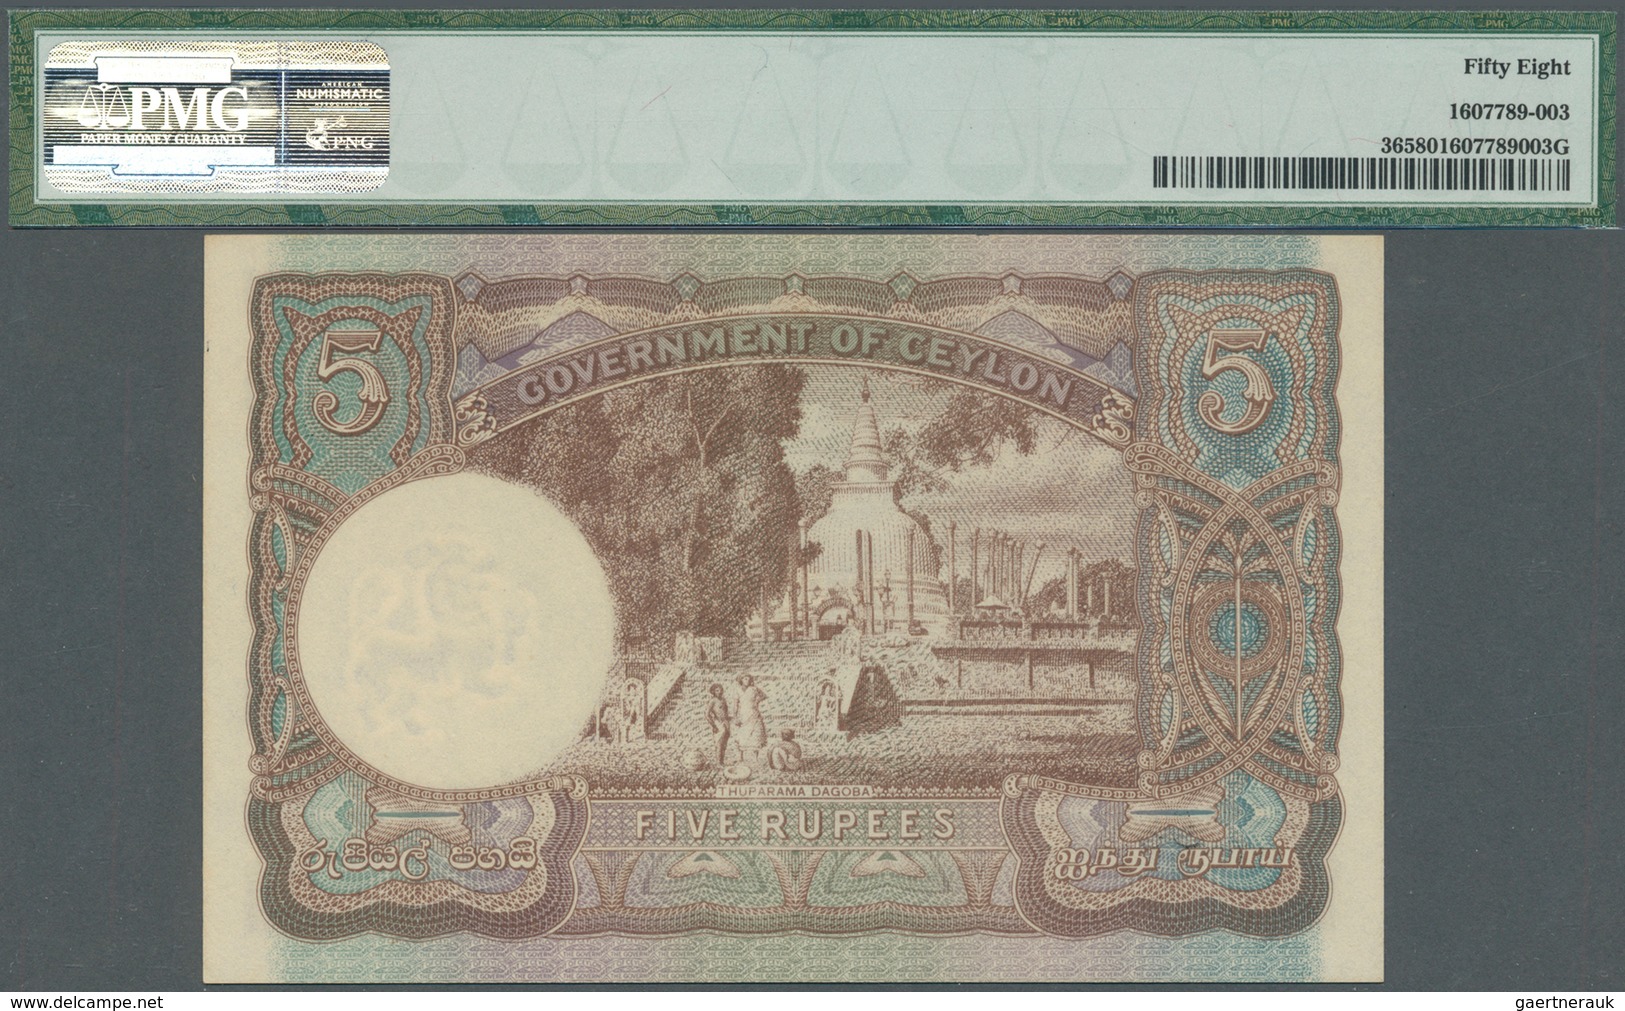 01273 Ceylon: 5 Rupees 1944 P. 36, Condition: PMG Graded 58 Choice AUNC. - Sri Lanka